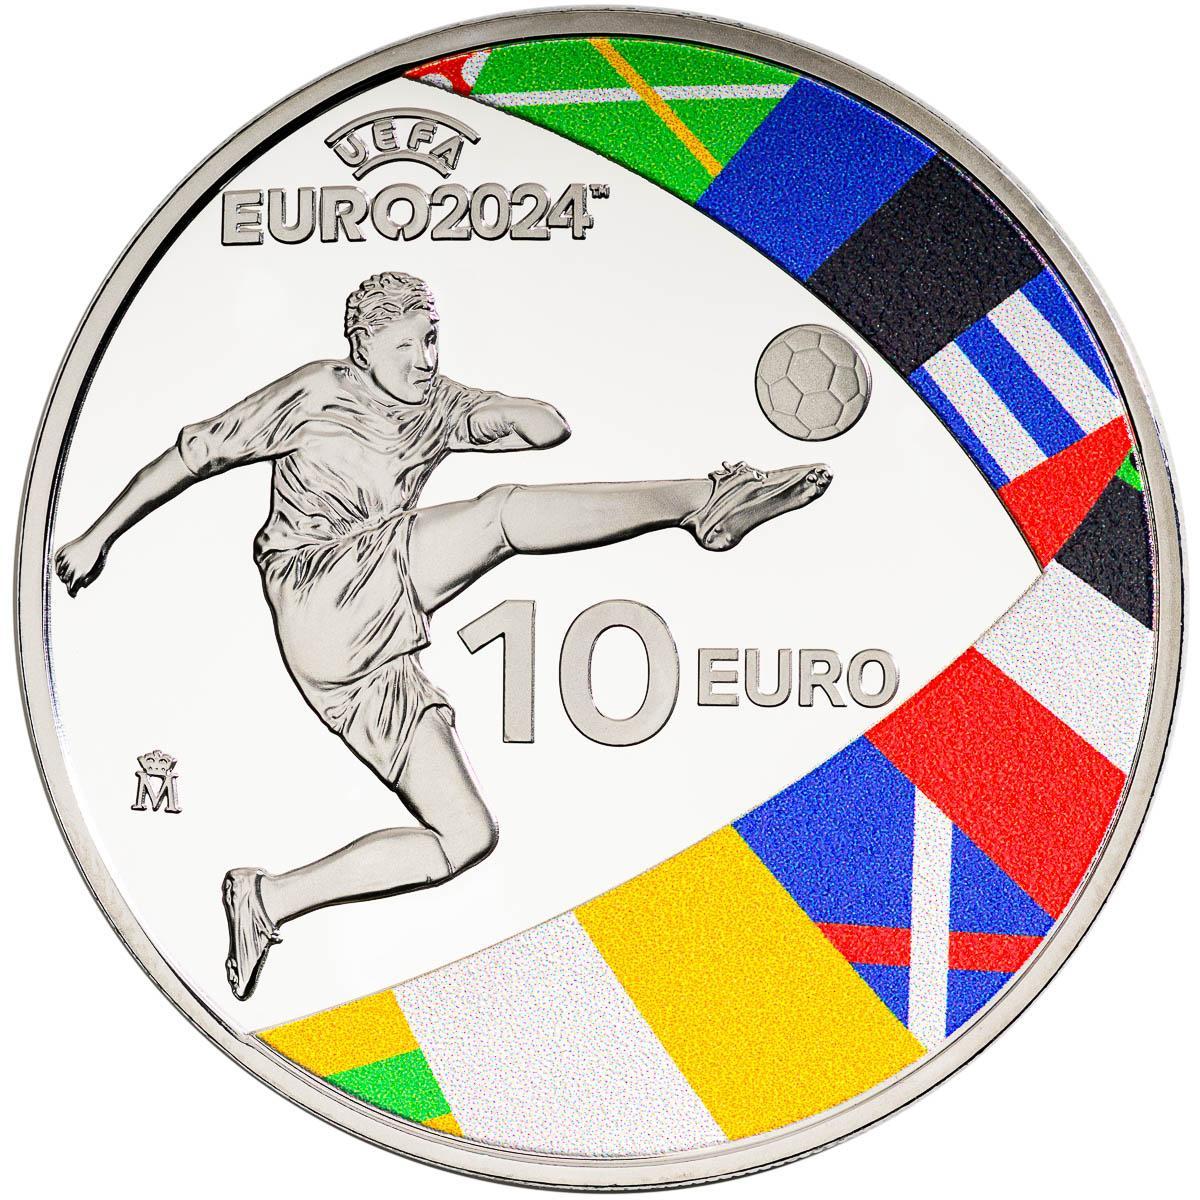 Detalle de la nueva moneda de 10 euros